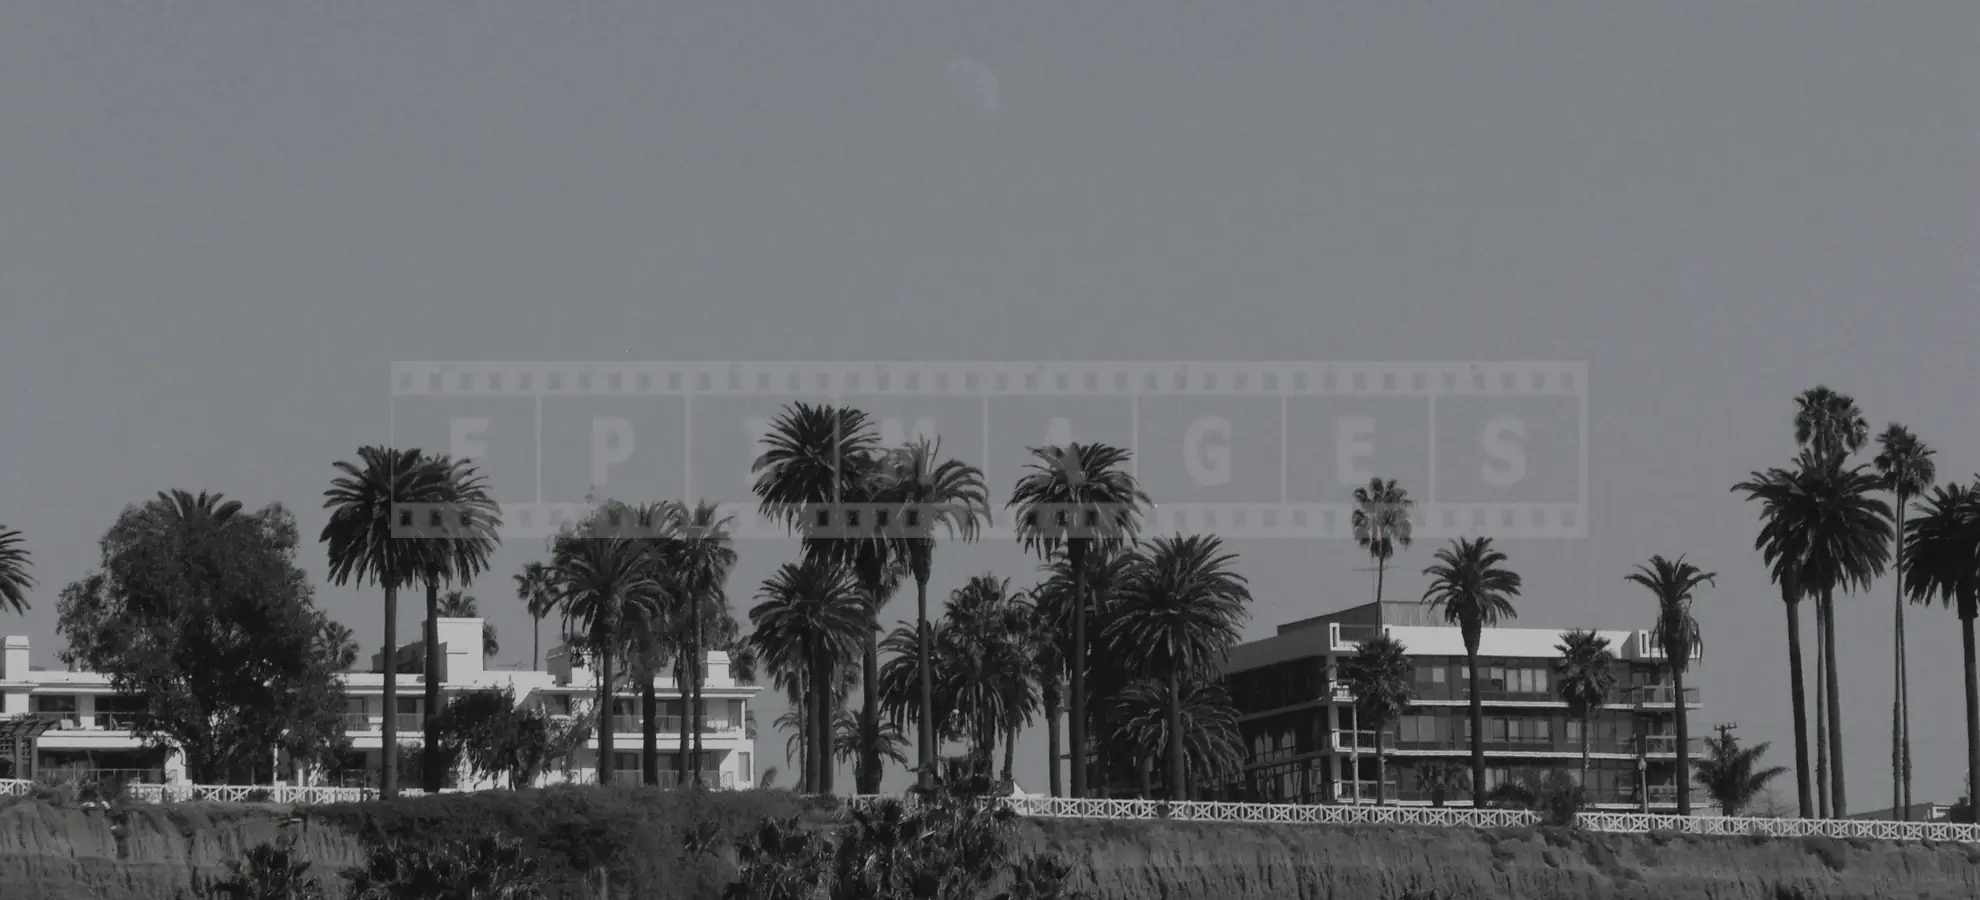 Pacific palisades park as seen from Santa Monica beach